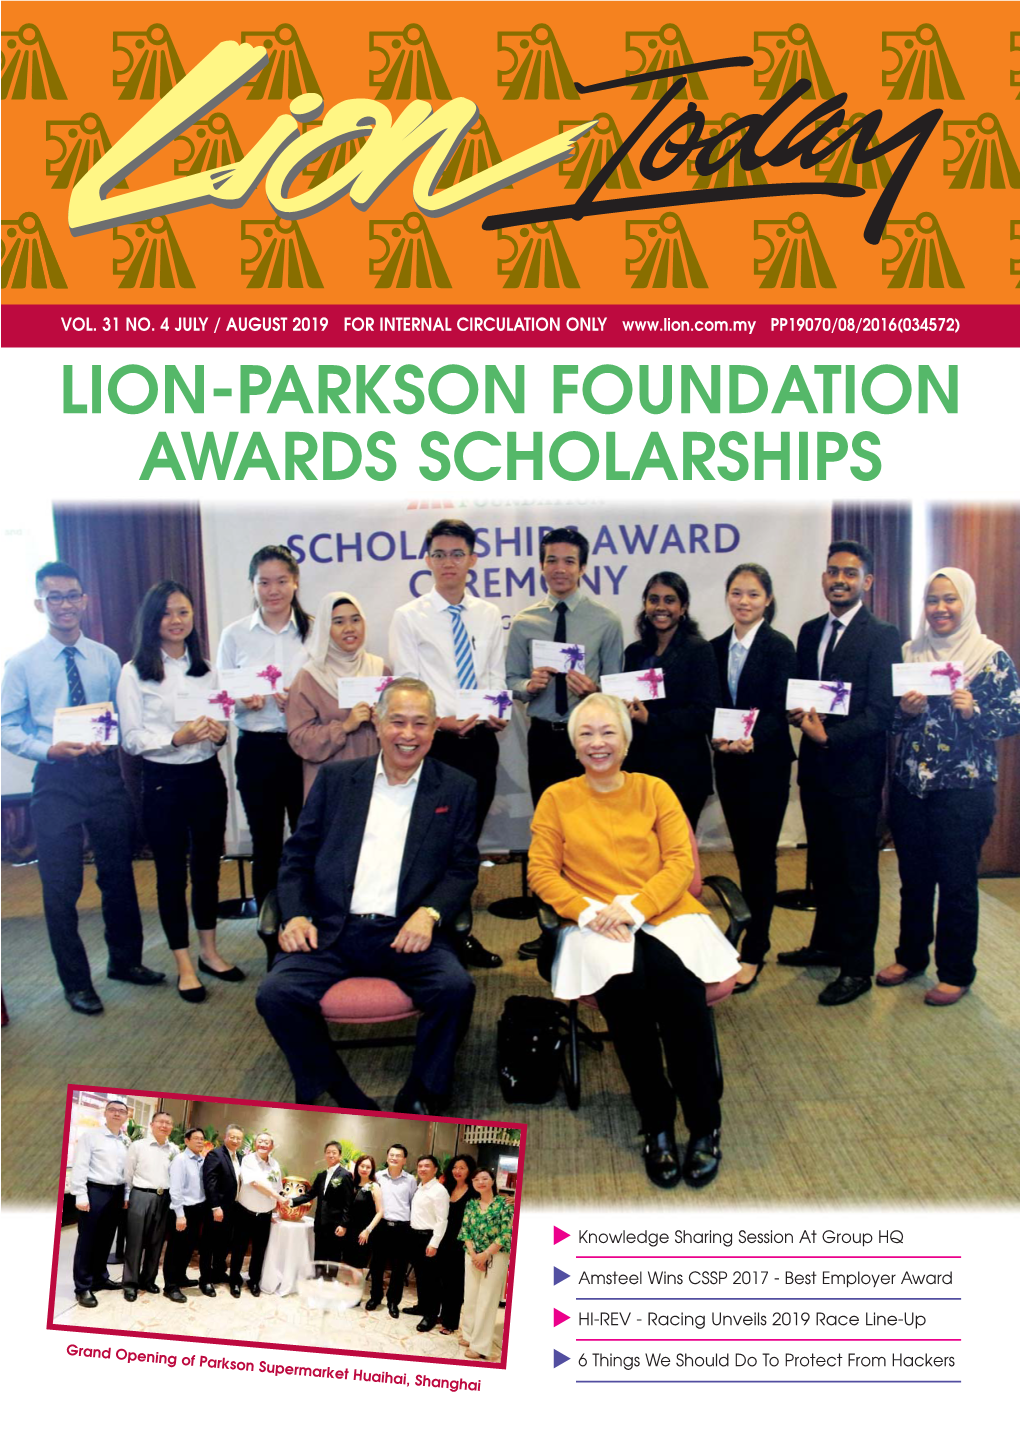 Lion-Parkson Foundation Awards Scholarships